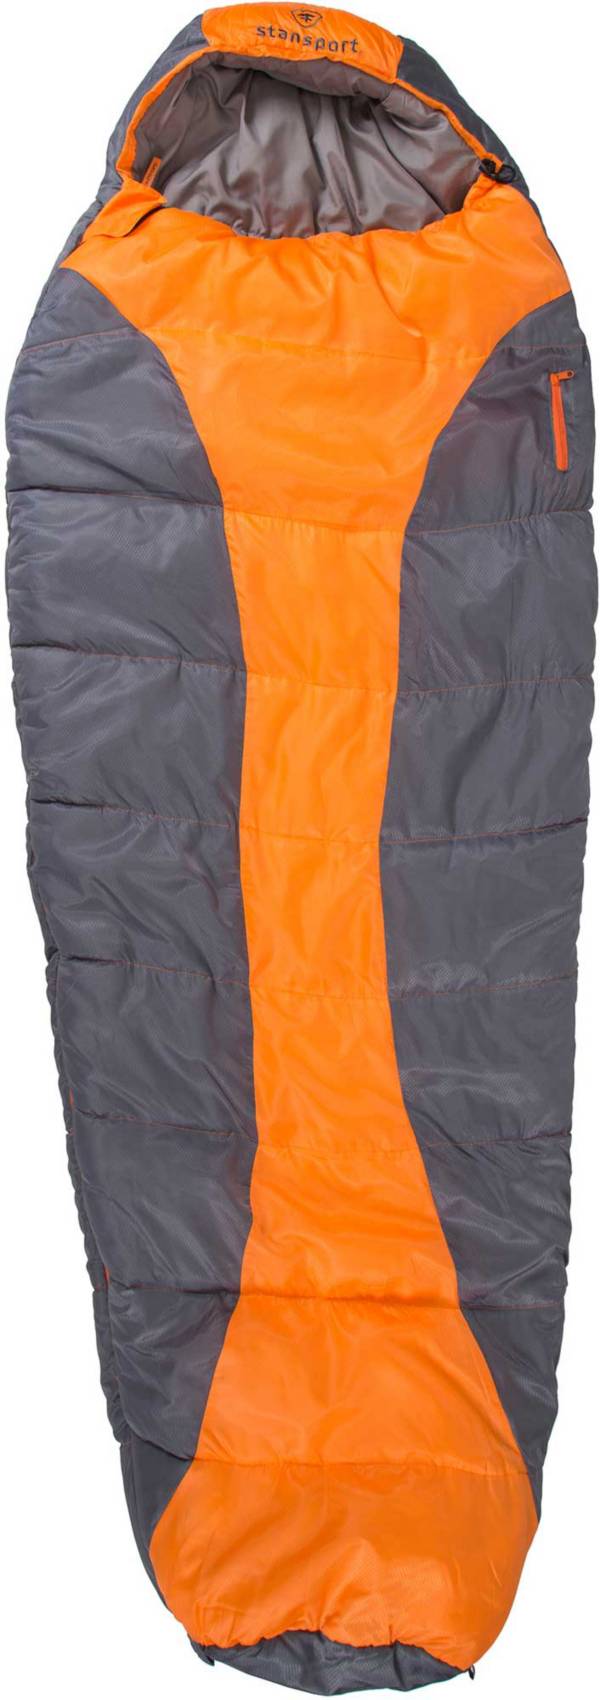 Stansport Glacier 0°F Mummy Sleeping Bag product image